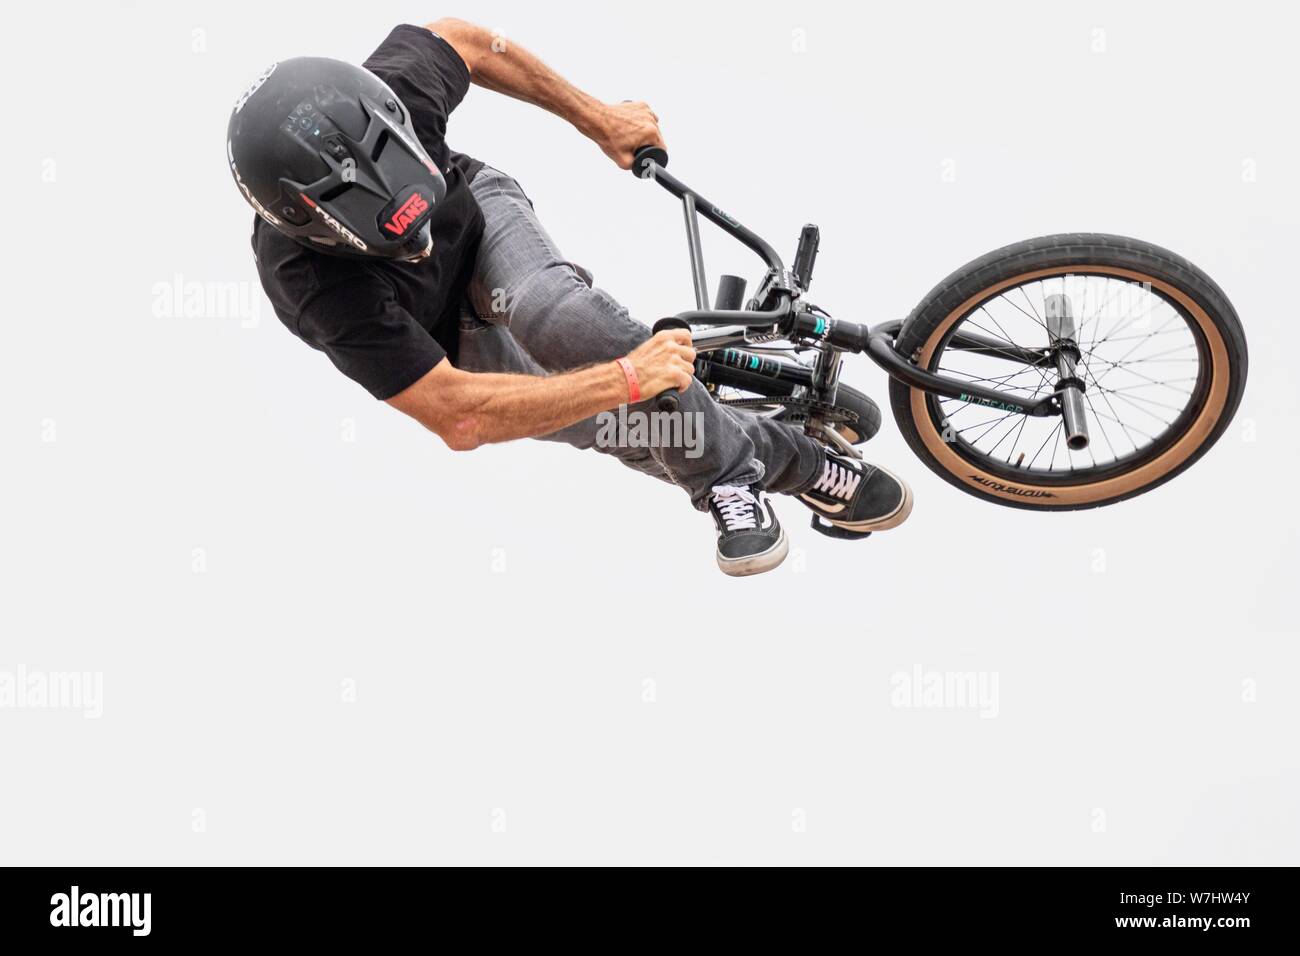 Professional BMX bike rider getting air Stock Photo